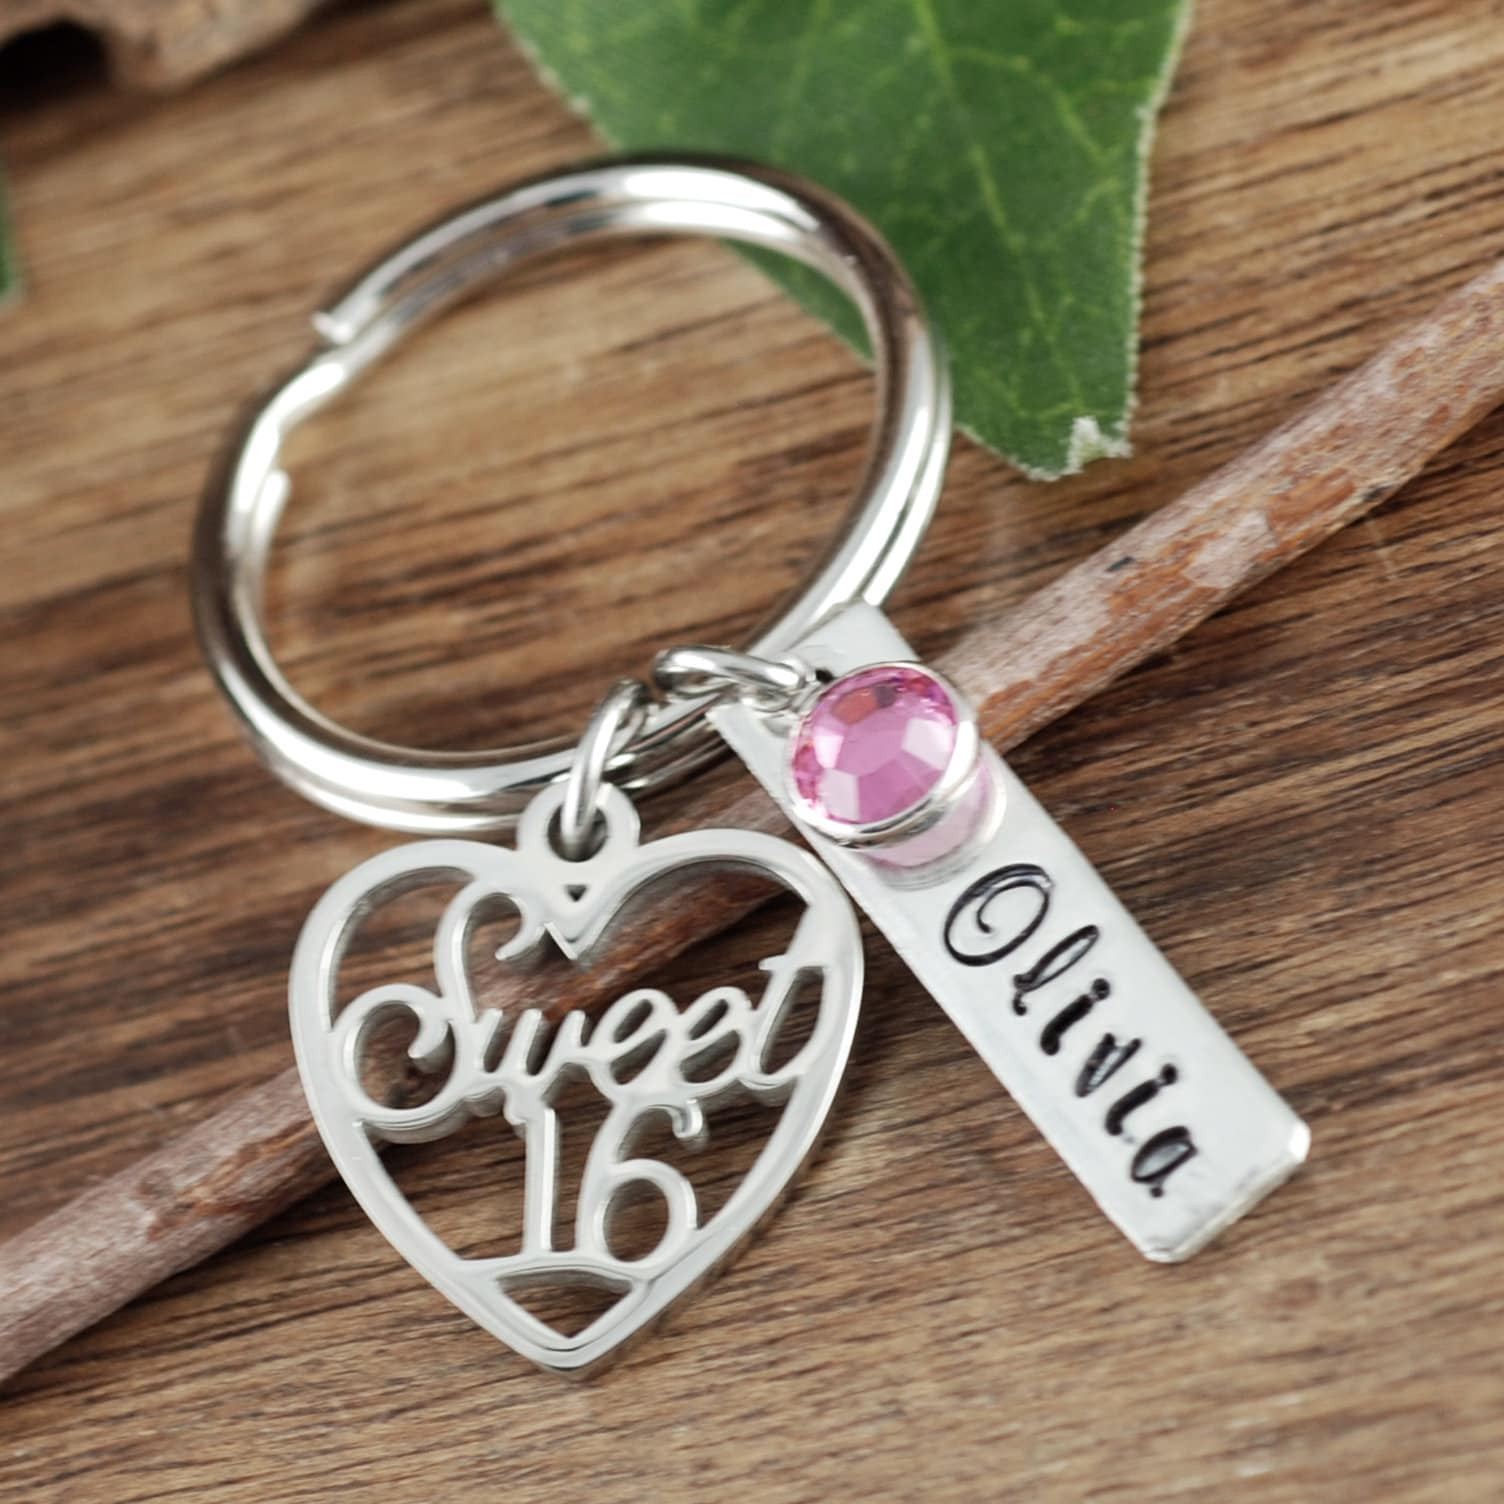 Sweet Sixteen Gift Ideas For Girls
 Personalized Sweet 16 Keychain Sweet Sixteen Jewelry